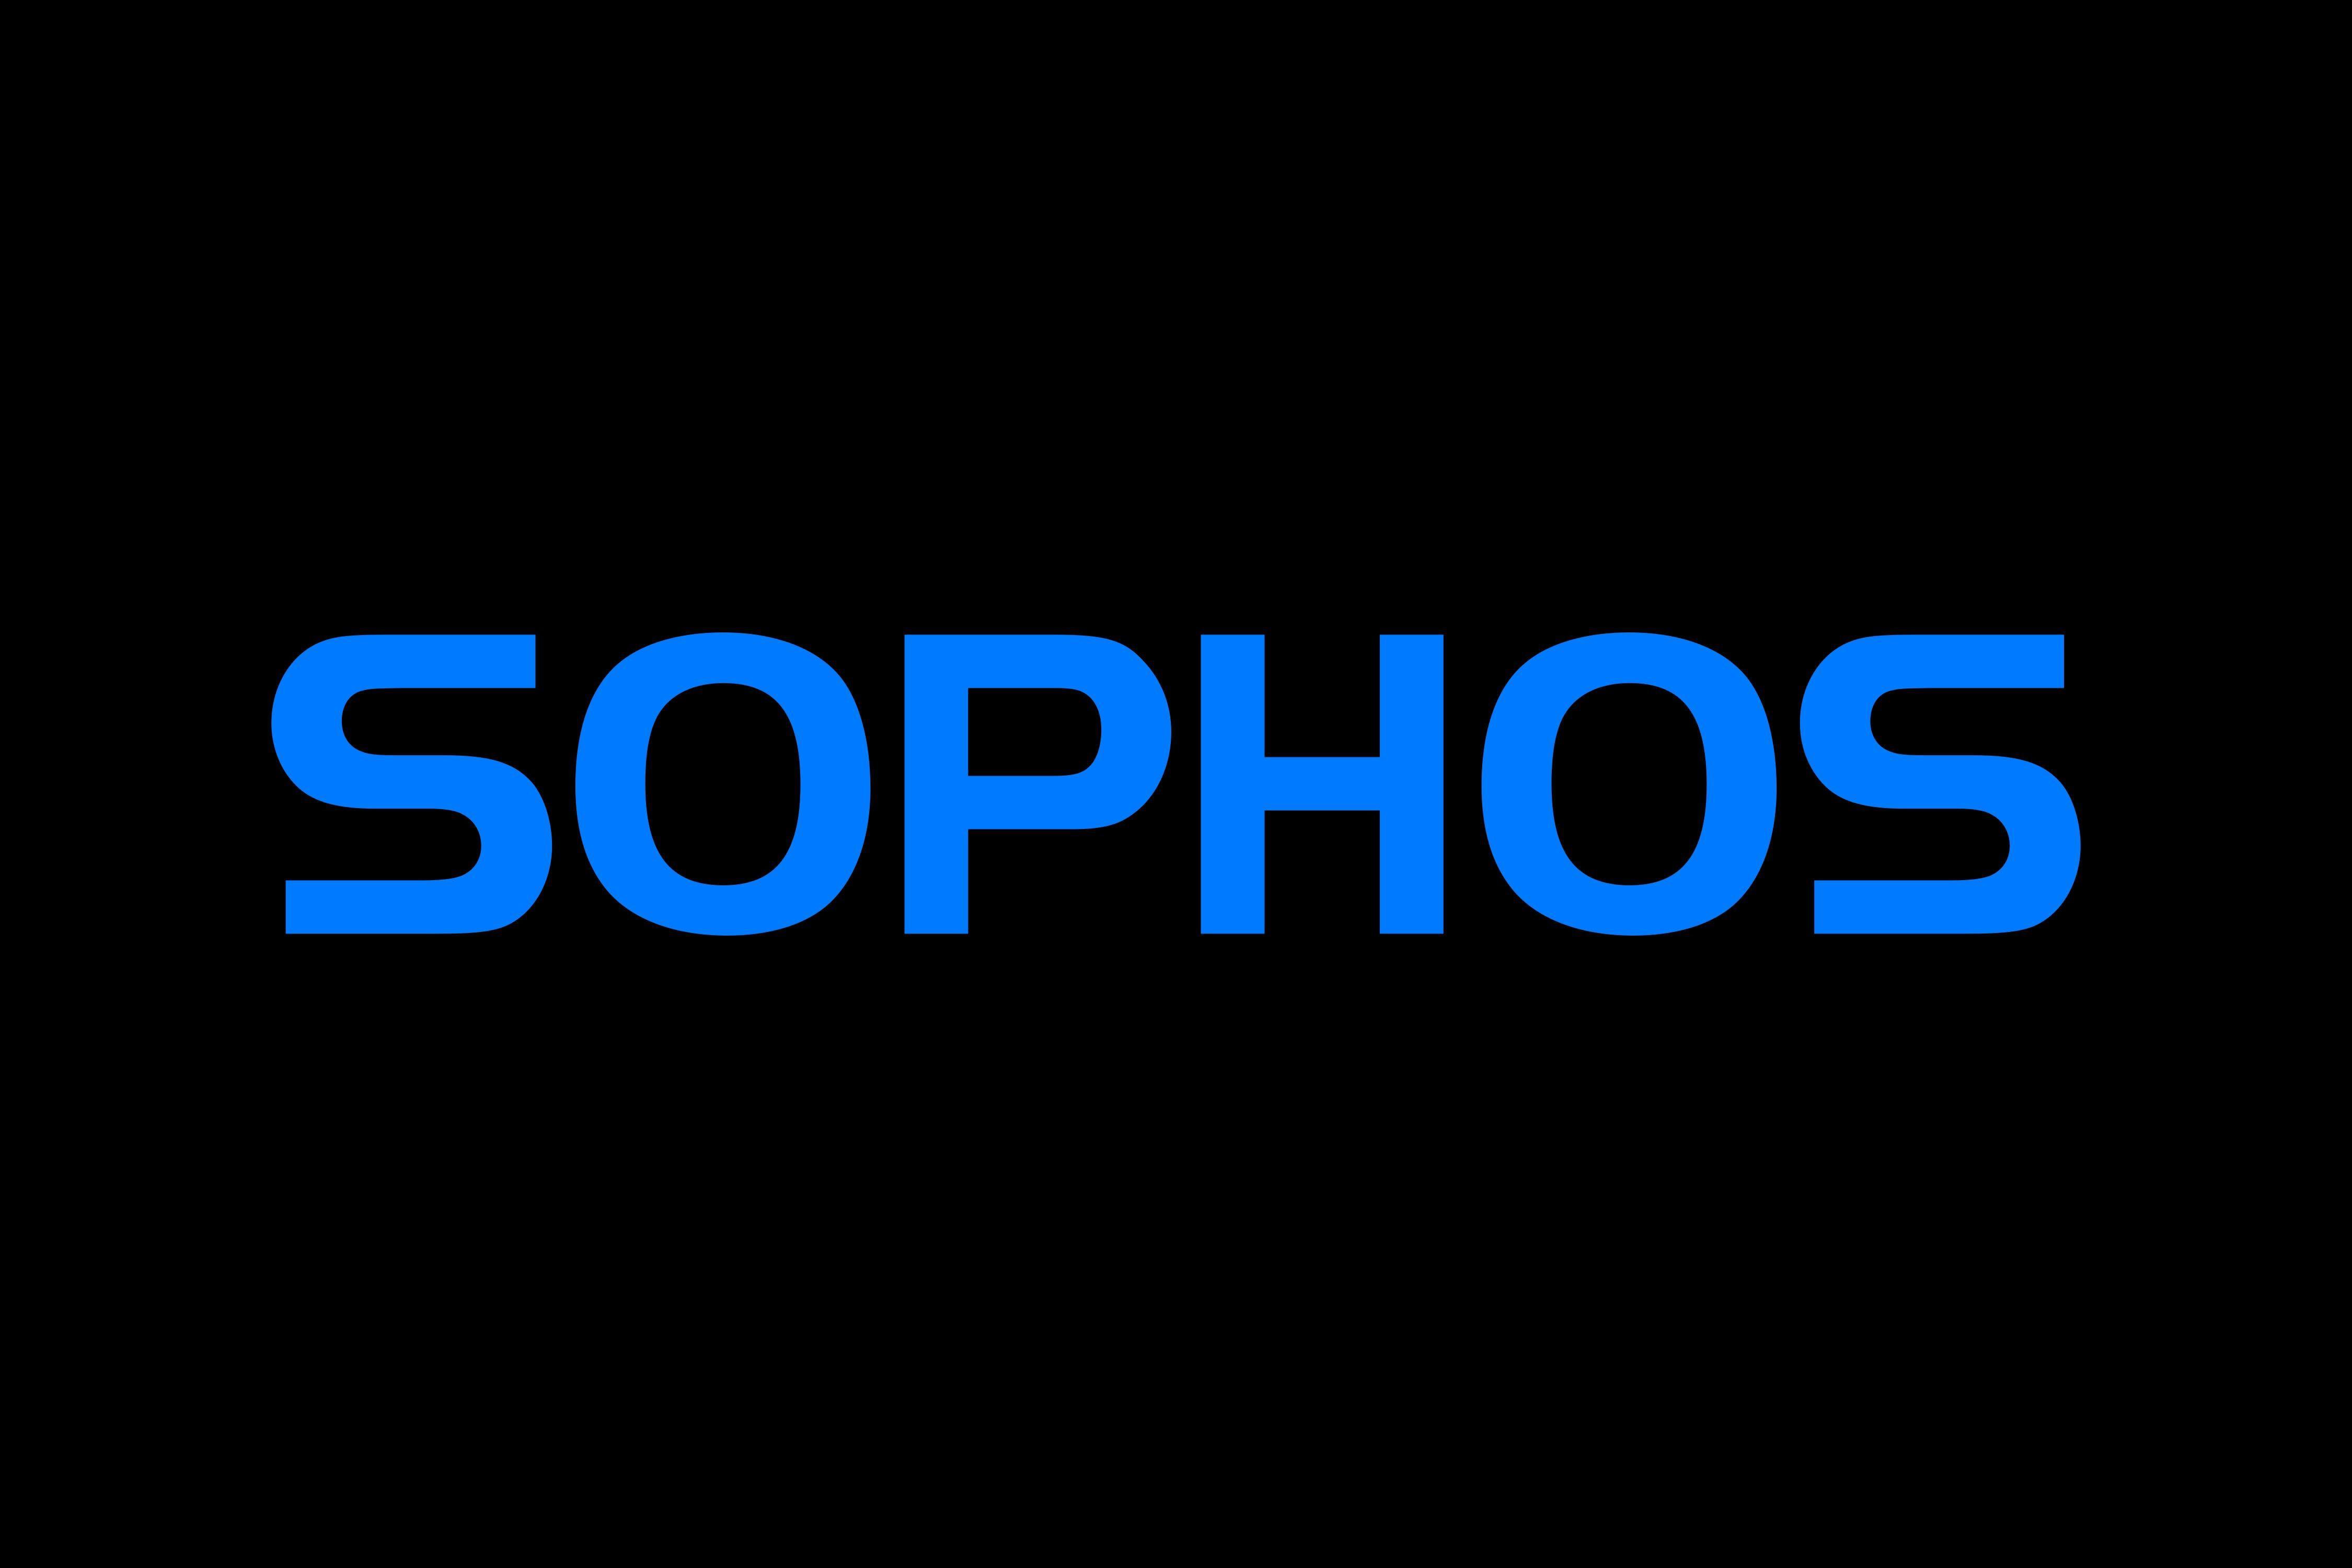 SOPHOS - SOPHOS added a new photo.